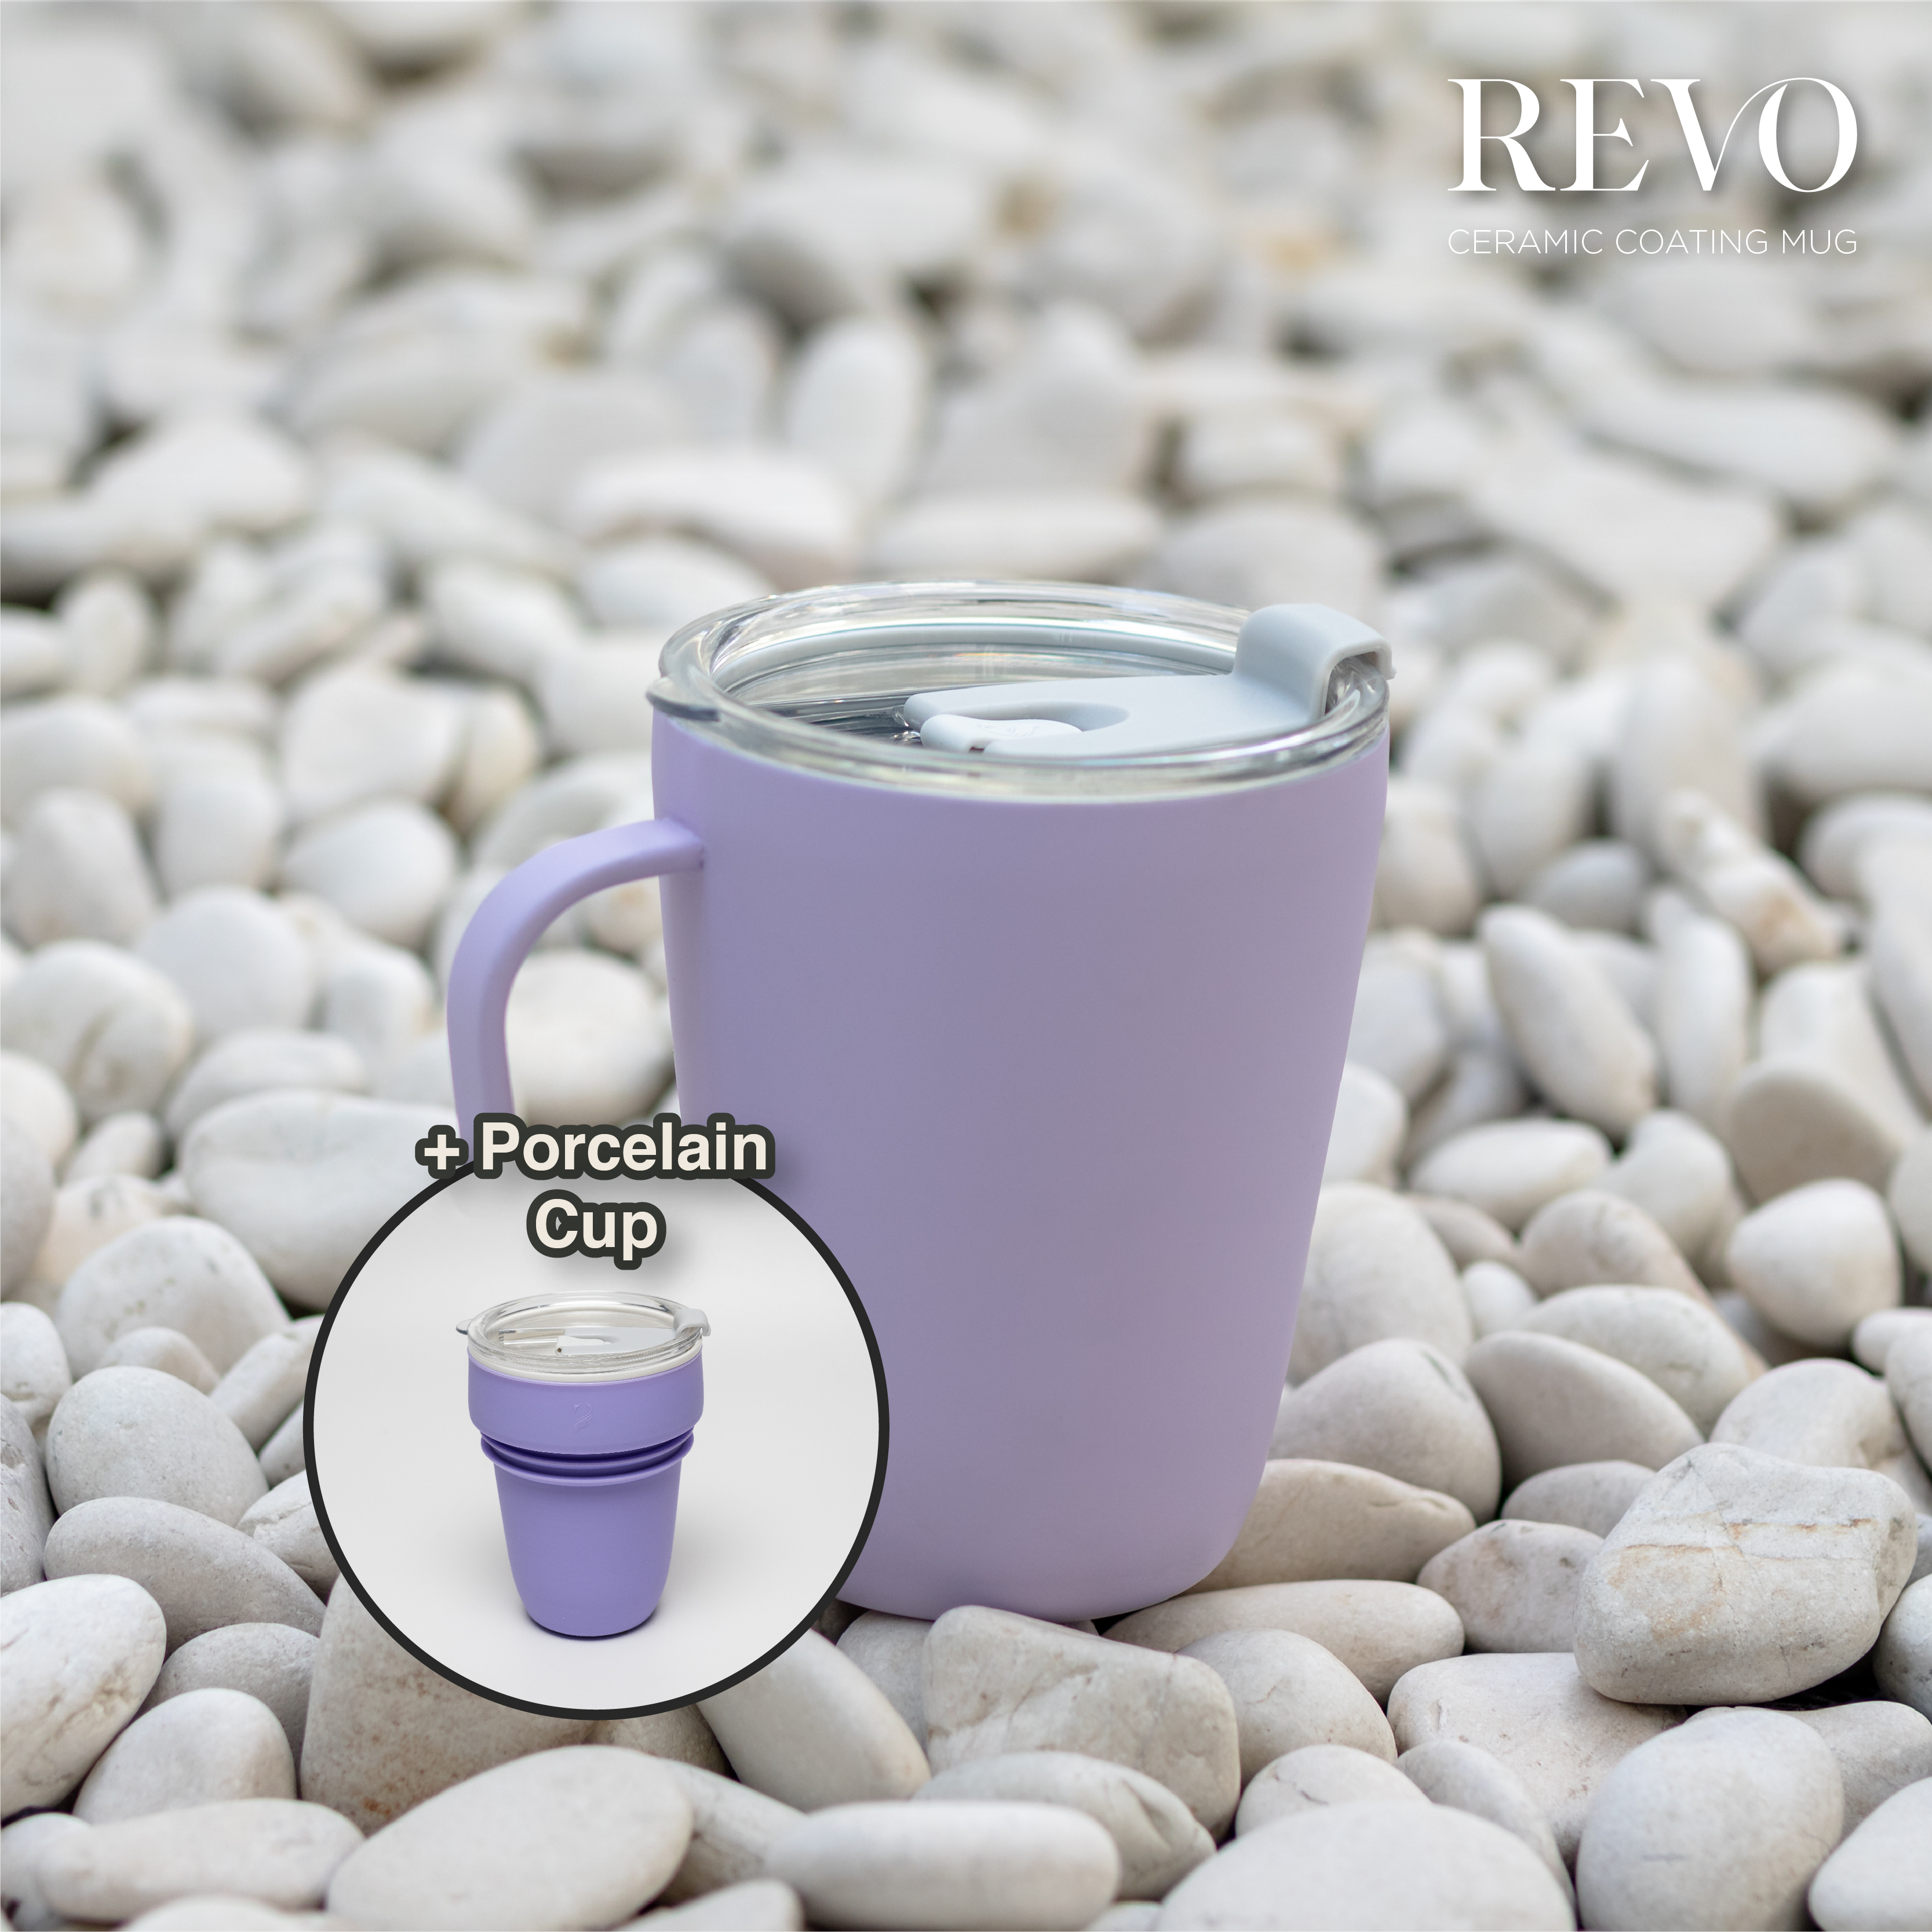 Revo Mug with Add-on Porcelain Cup